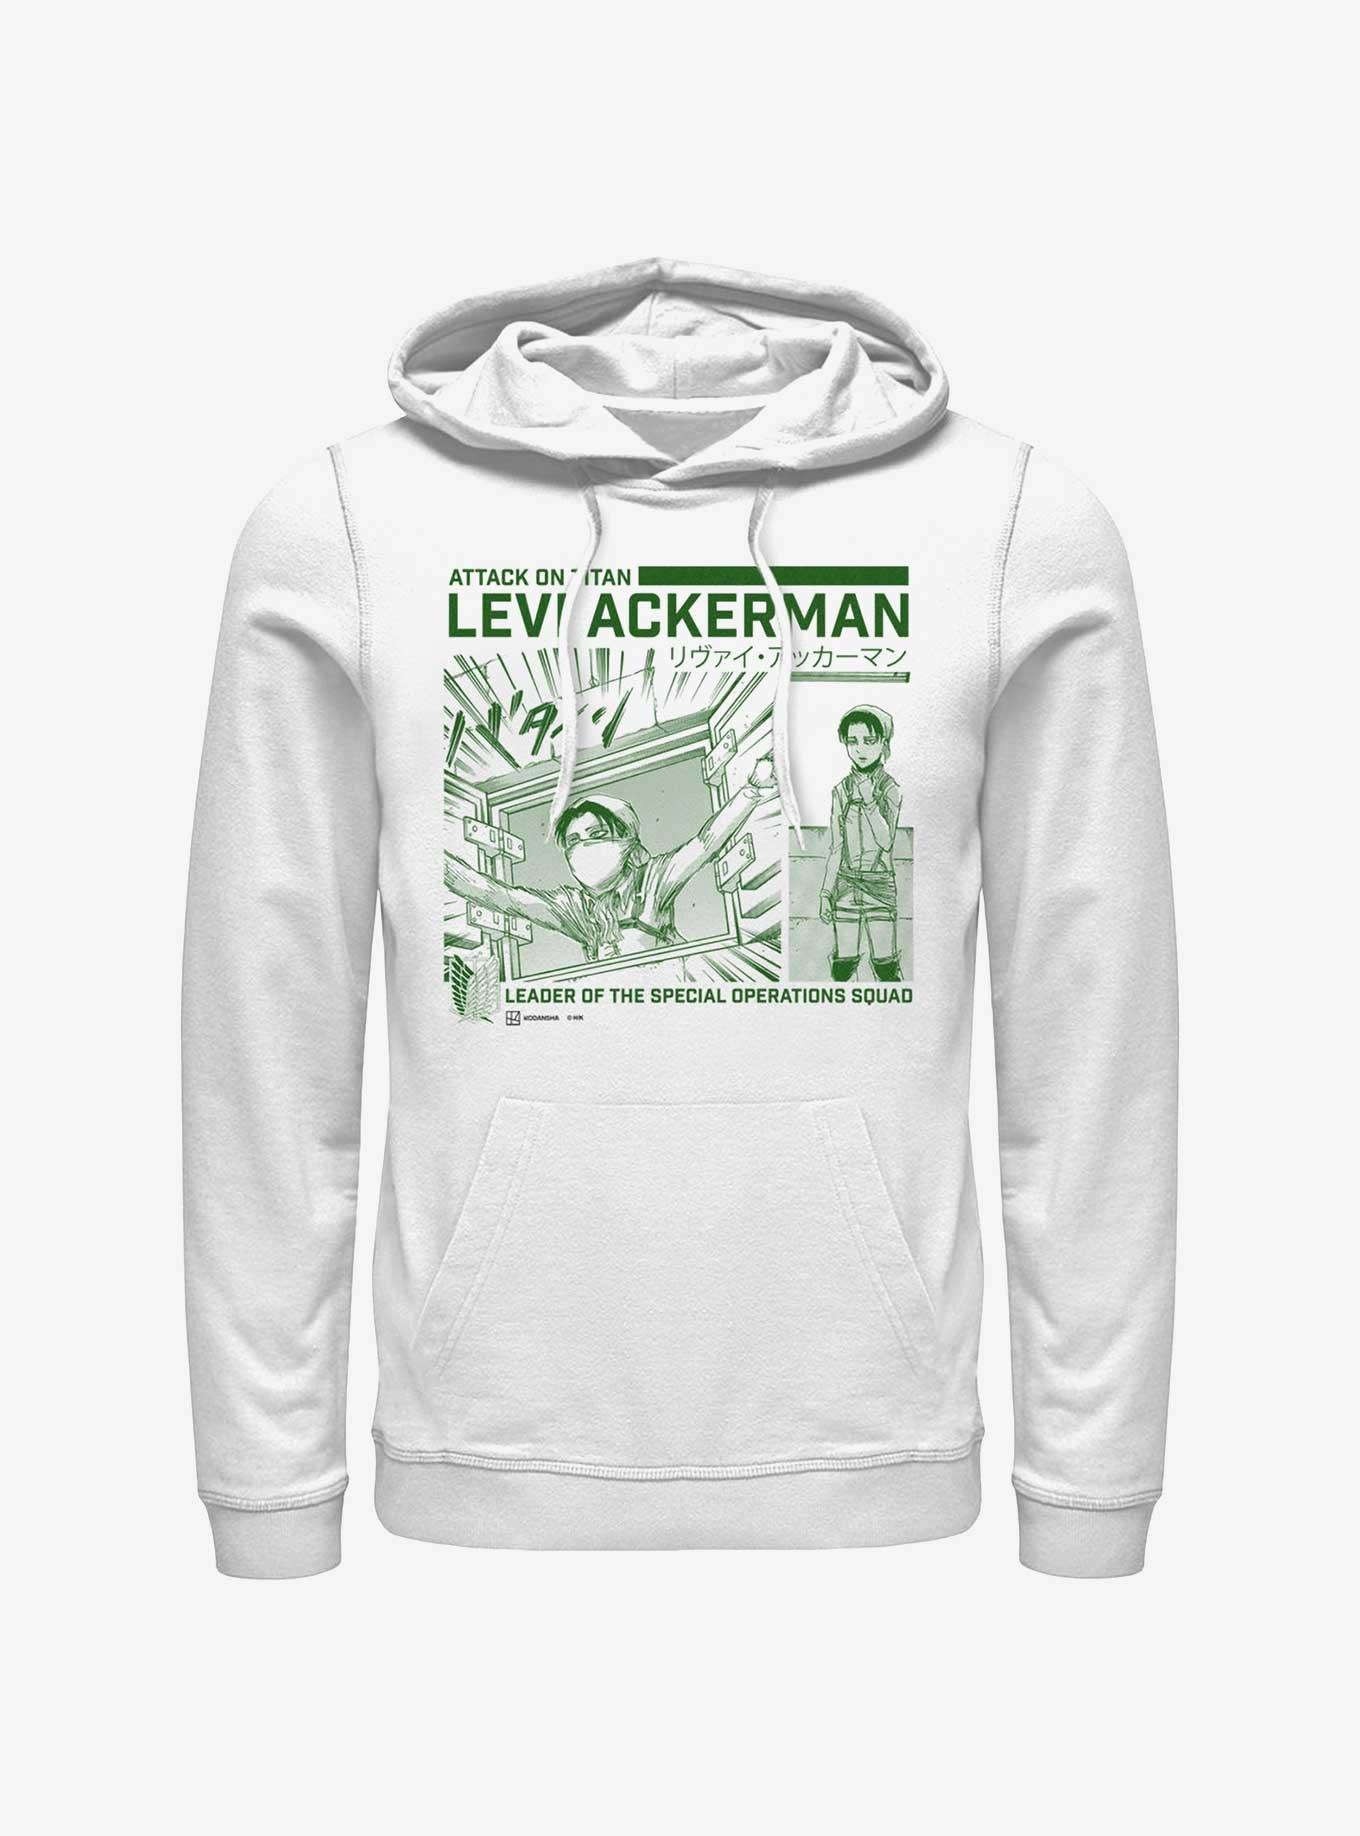 Levi Ackerman Oversized T-Shirt, Attack on Titan Merch